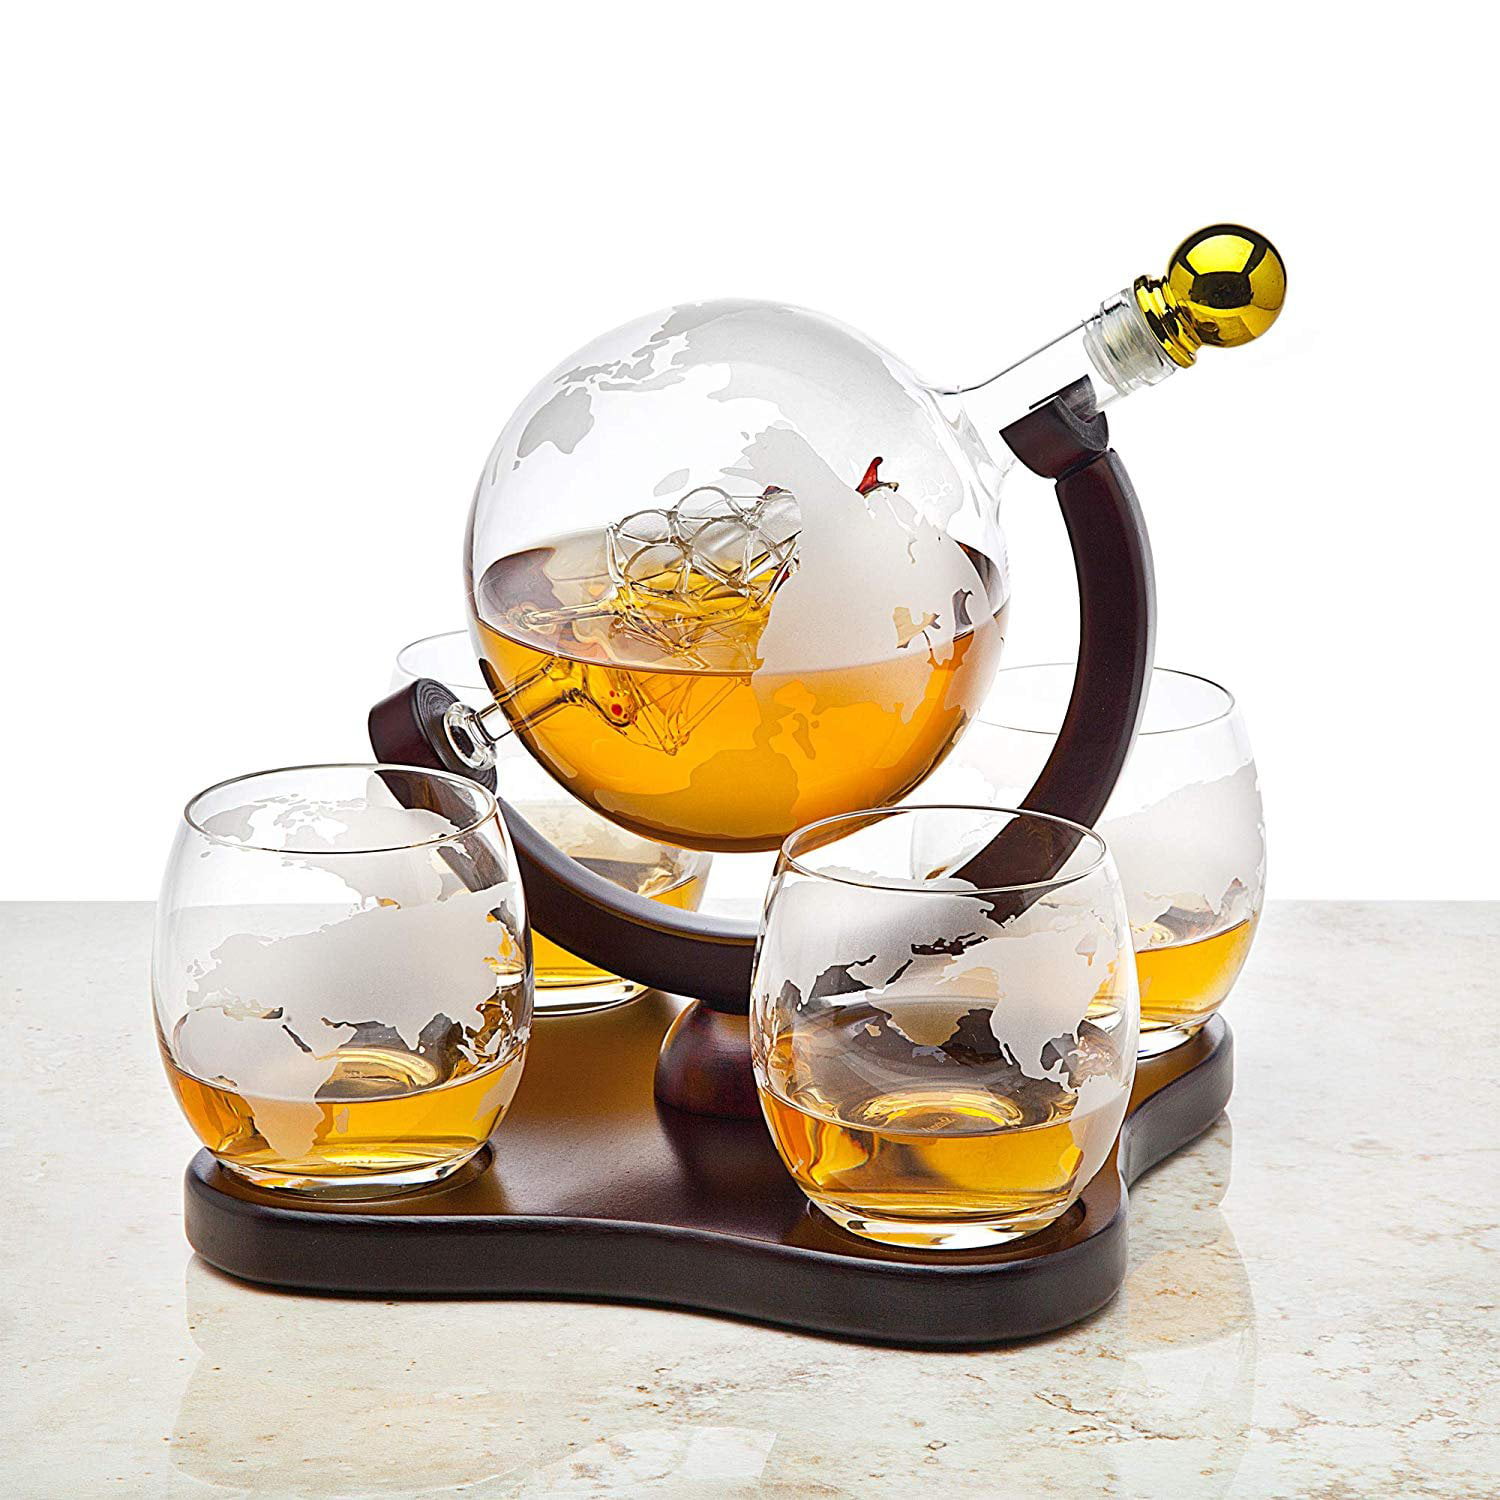 Godinger Whiskey Decanter Airplane Globe Set with 2 World Whisky Glasses for Liquor Scotch Bourbon Vodka 